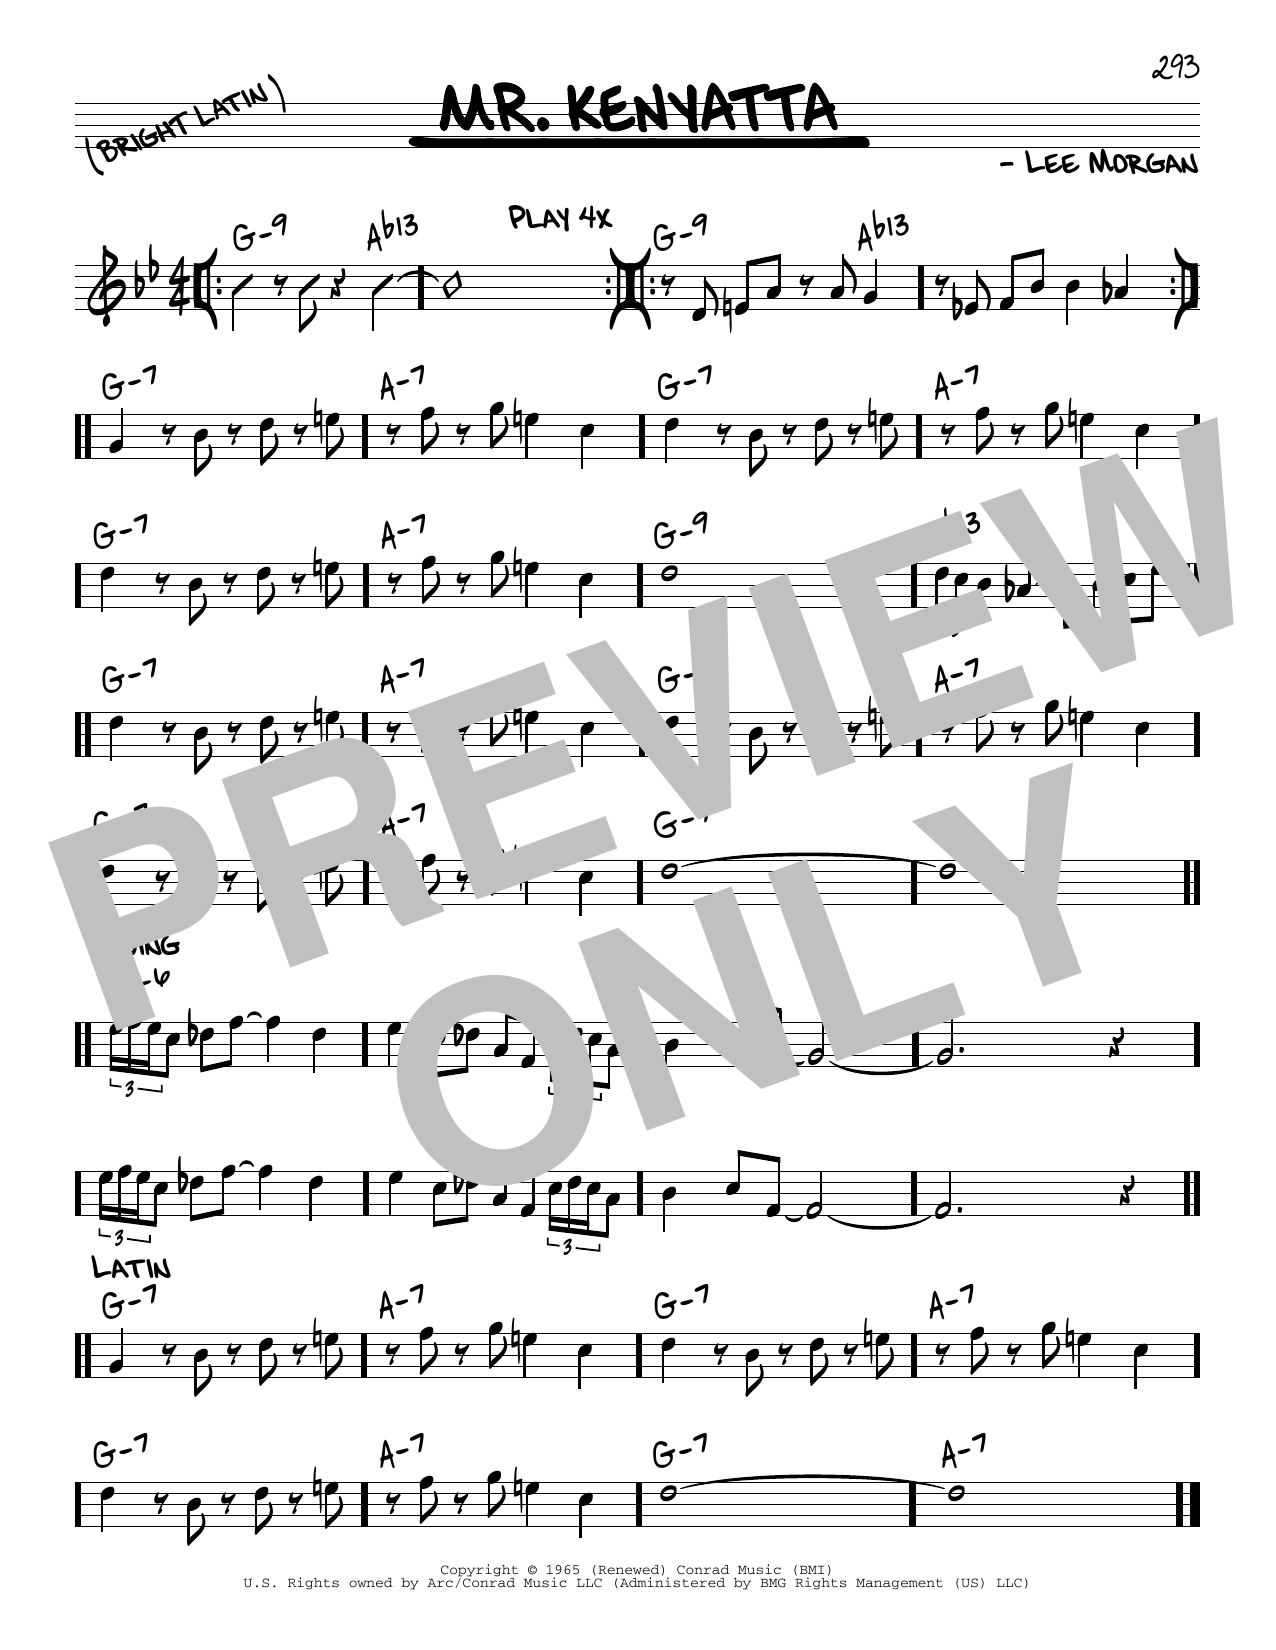 Lee Morgan Mr. Kenyatta Sheet Music Notes & Chords for Real Book – Melody & Chords - Download or Print PDF